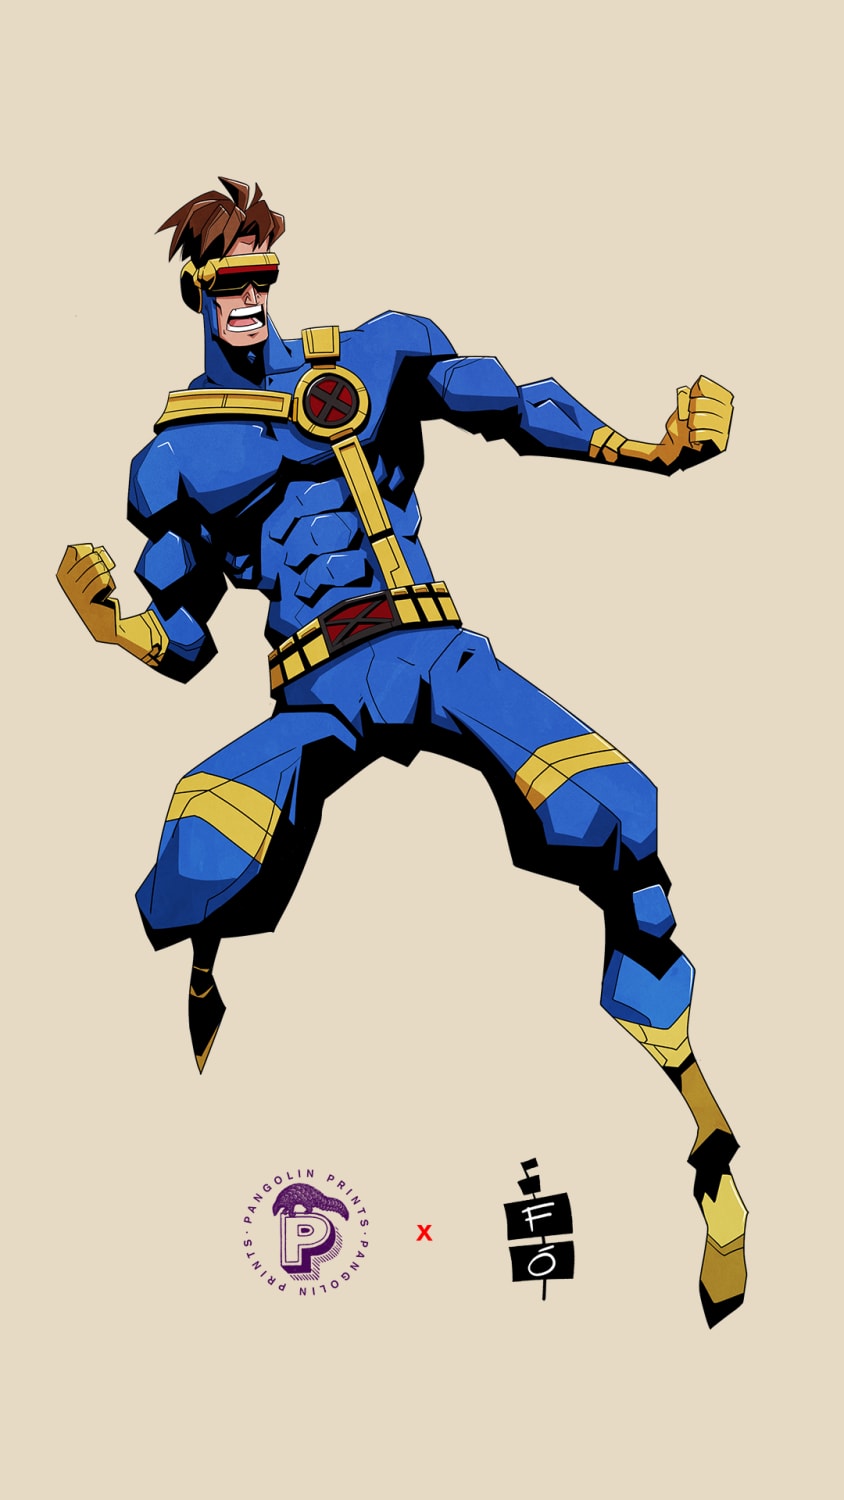 Cyclops - Frank Calicó | 3 of 12 new fan created pieces celebrating 1991 X-Men #1